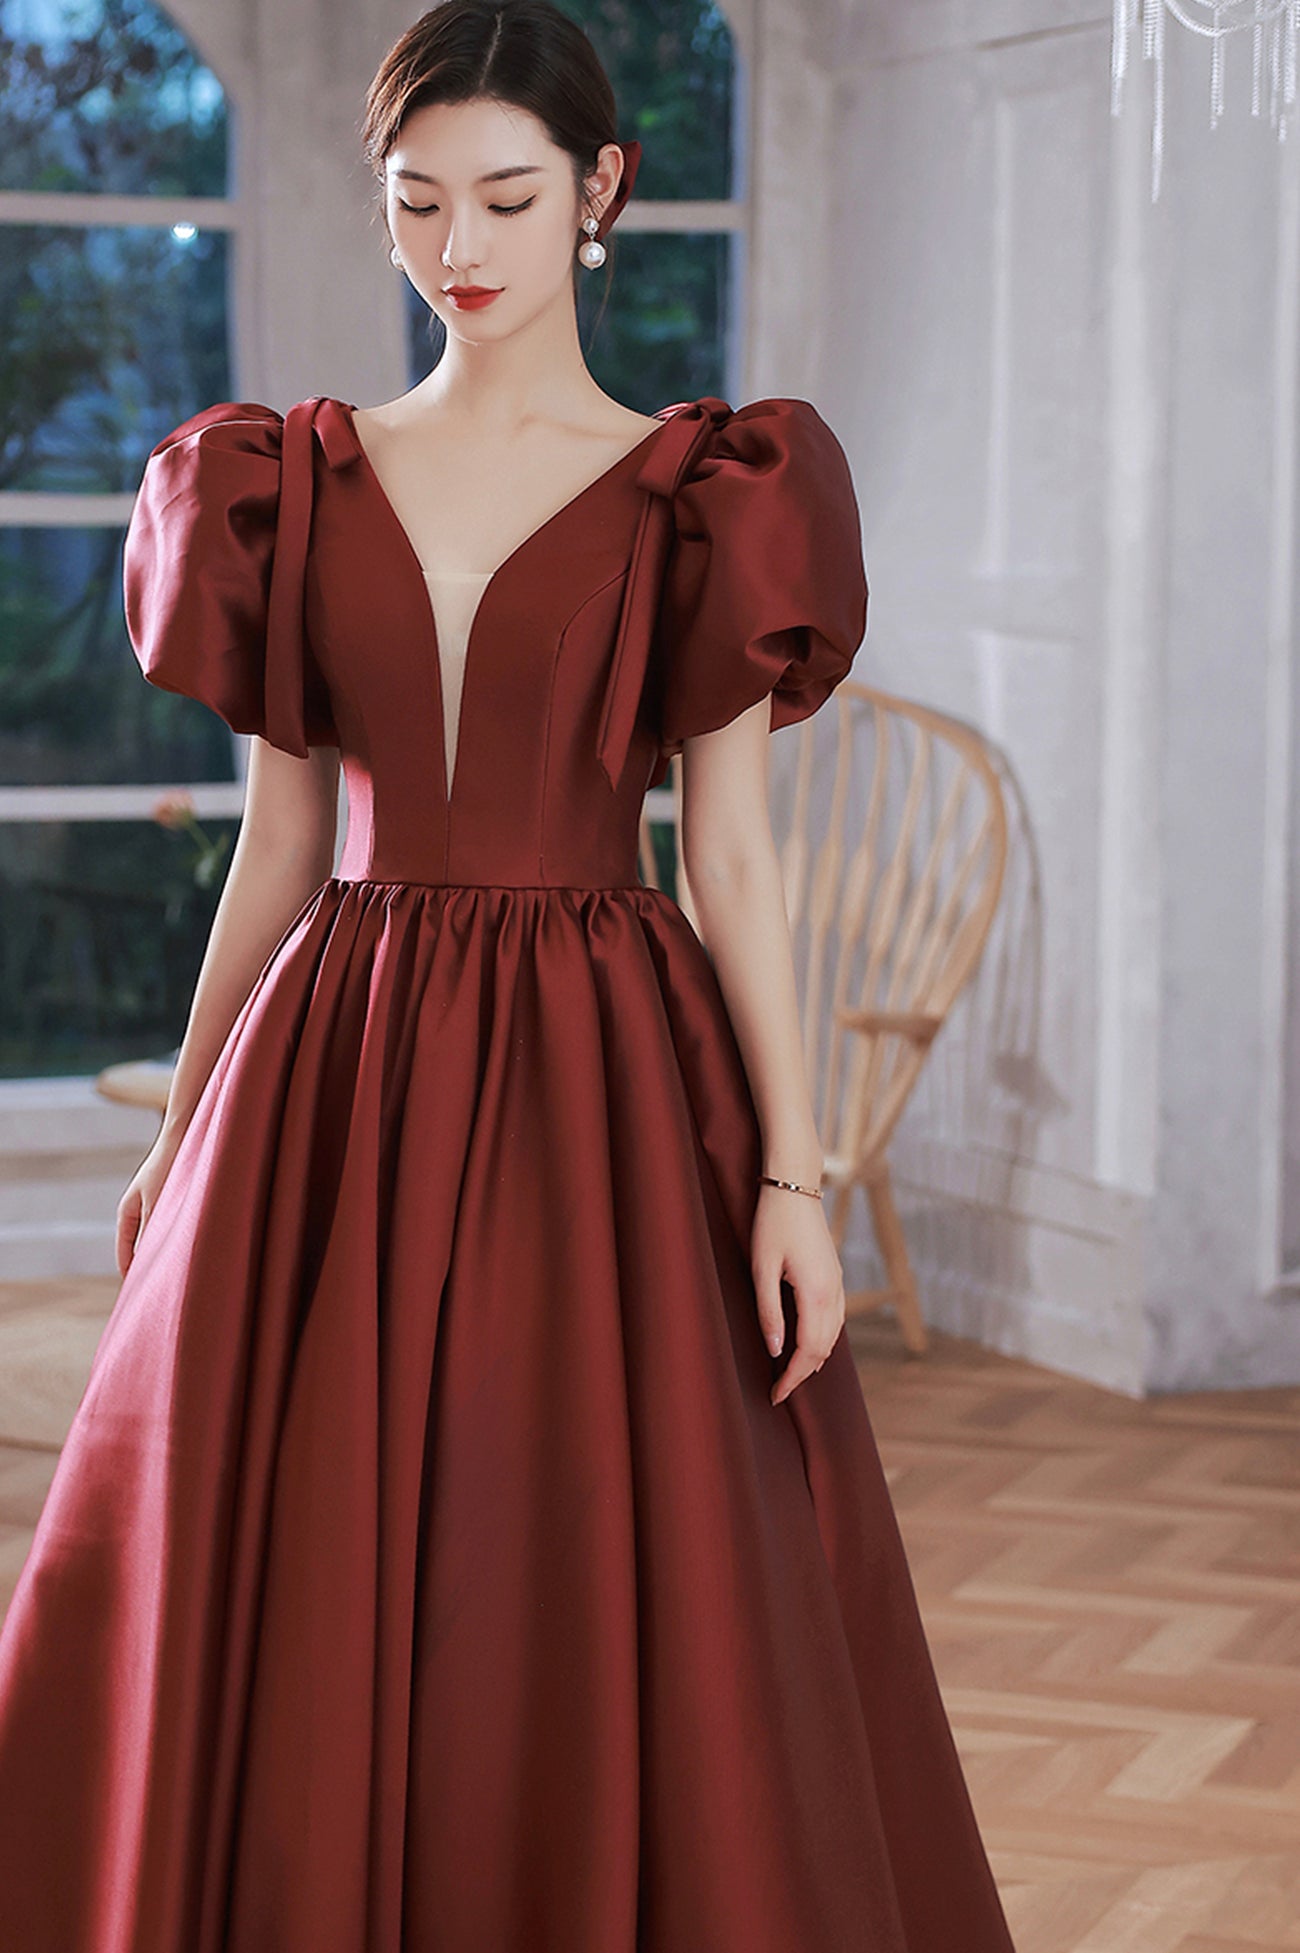 Burgundy Satin Long A-Line Prom Dress, V-Neck Short Sleeve Evening Dress